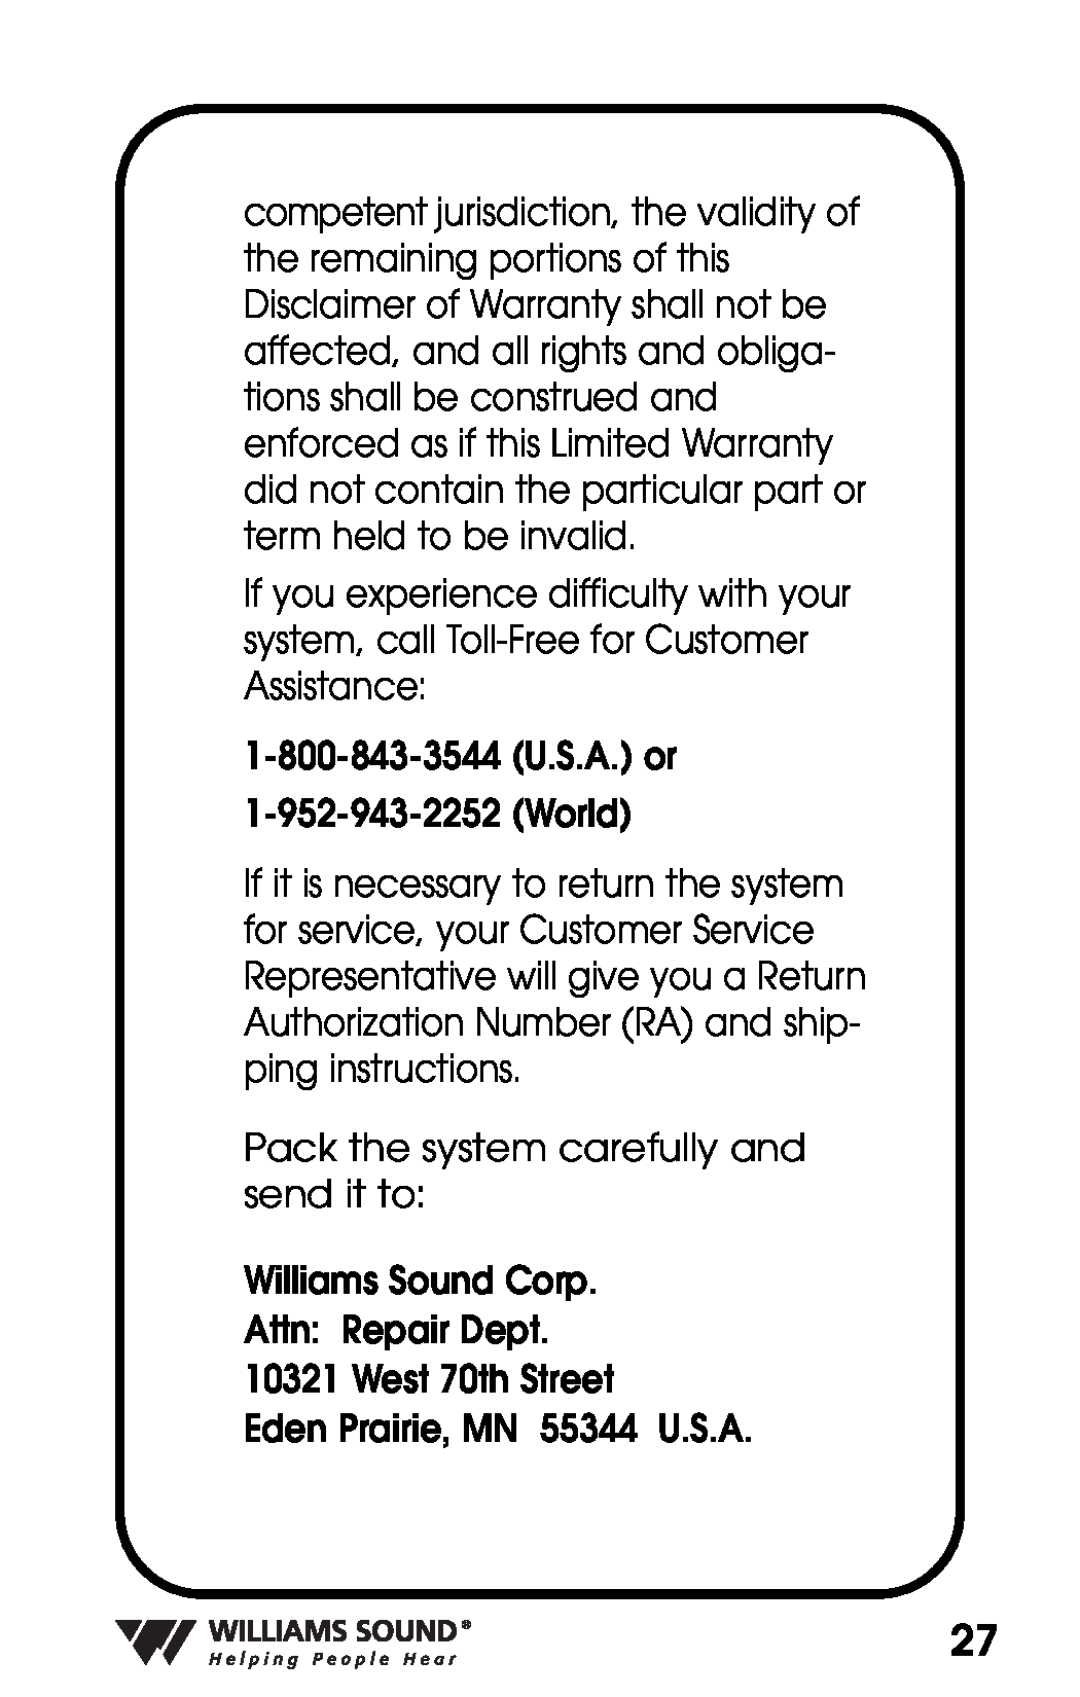 Williams Sound PKT D1 manual 